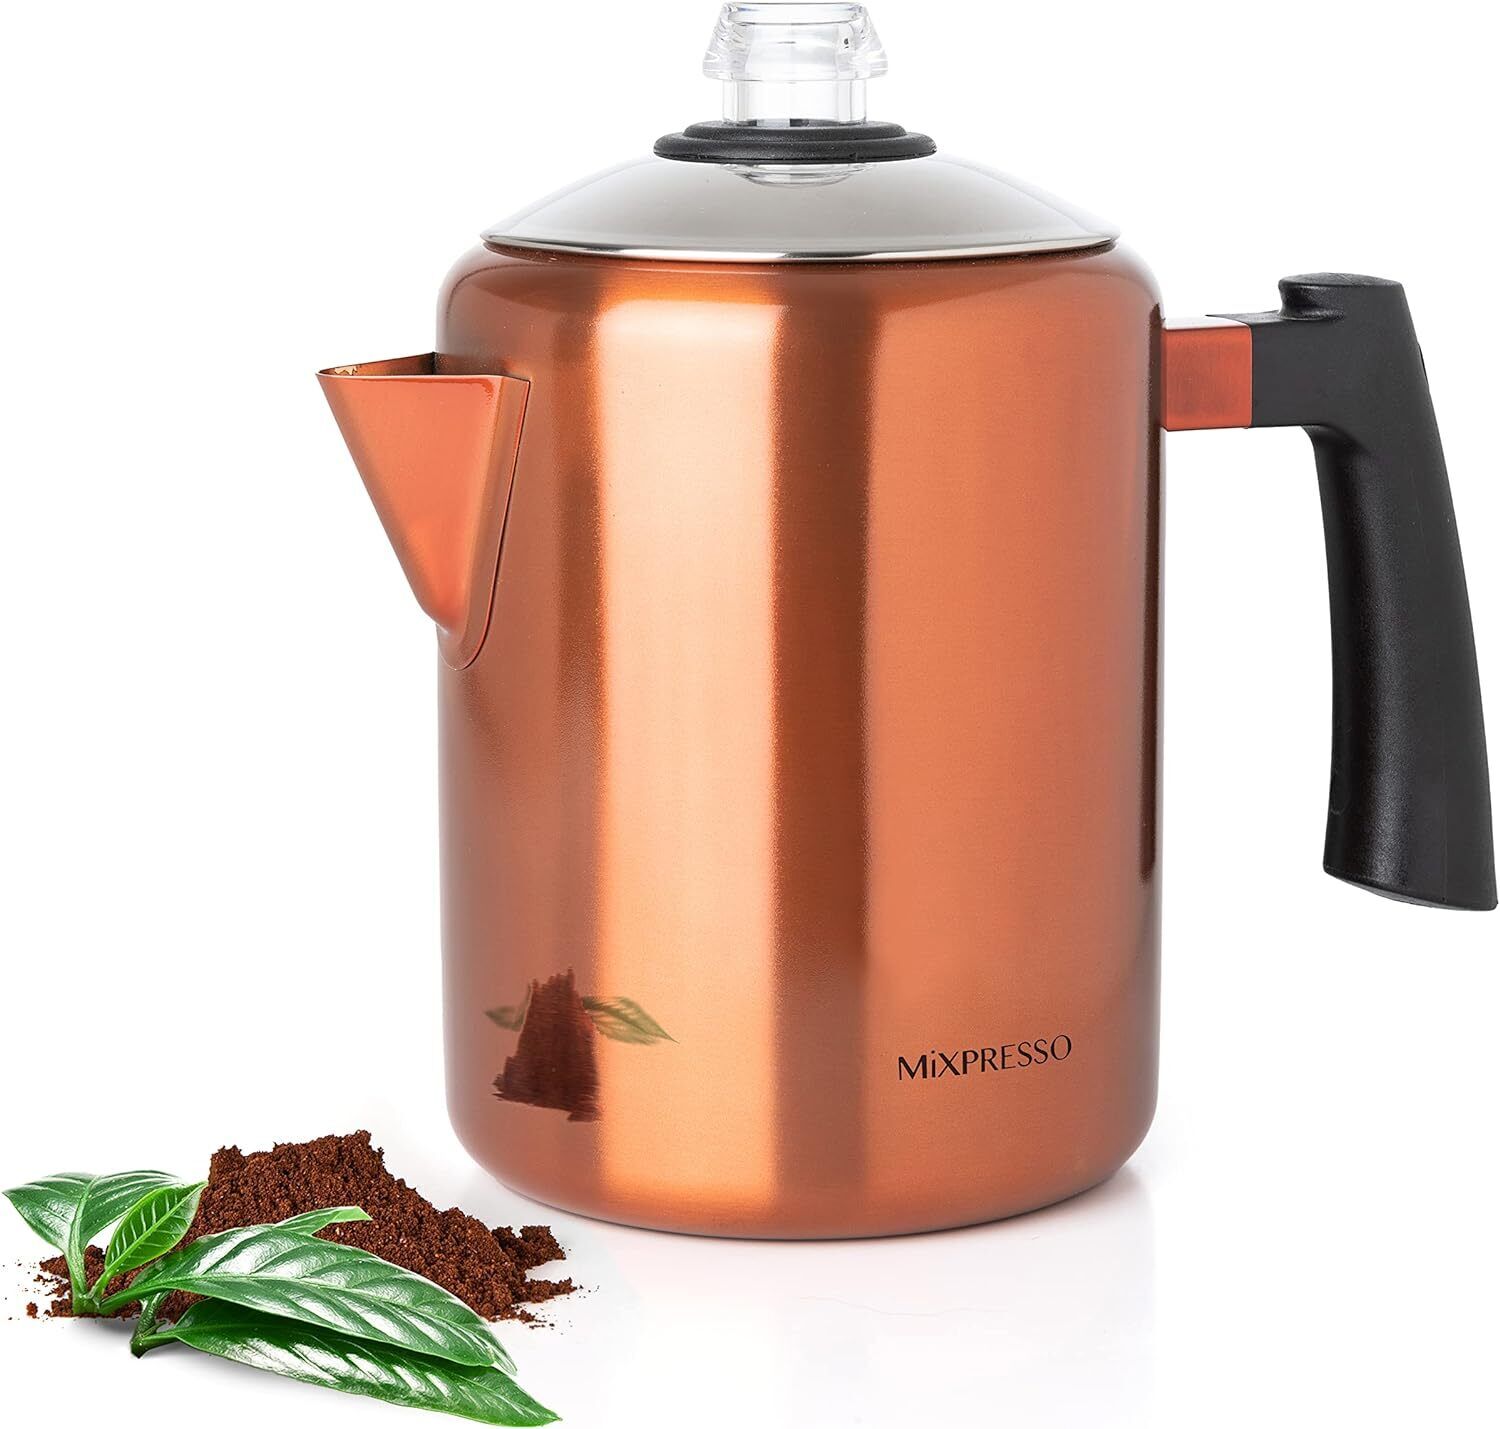 Mixpresso Stainless Steel Stovetop Coffee Percolator, Percolator Coffee Pot,